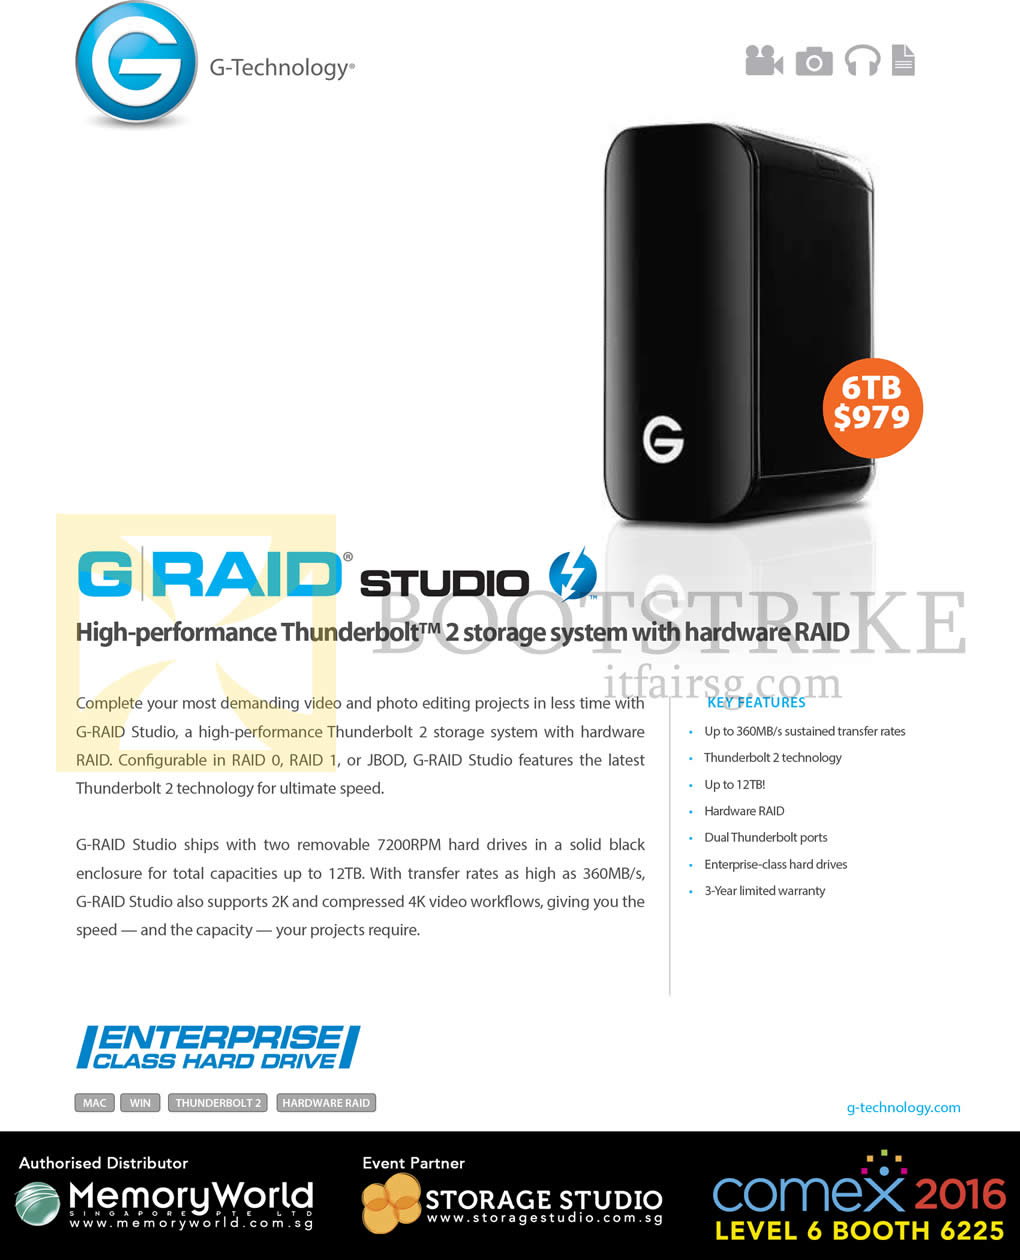 COMEX 2016 price list image brochure of Memory World G-Technology G Raid Studio 6TB